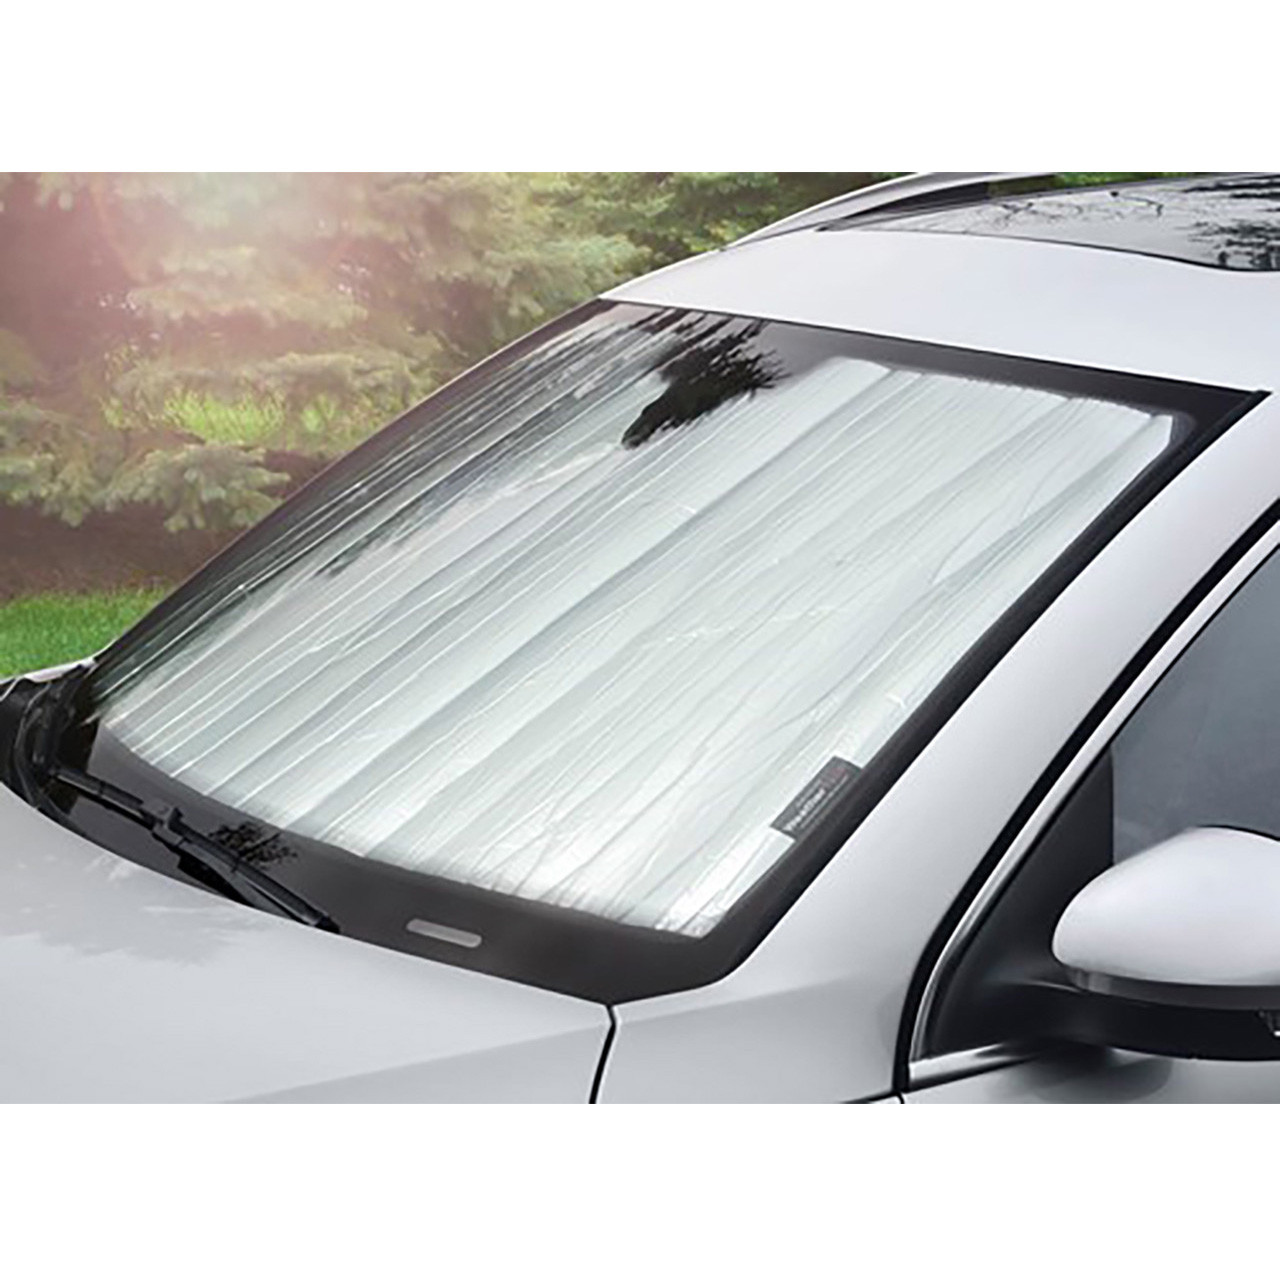 LFOTPP Car Windshield Sunshades for Ioniq 5 2022 2023 Front Window